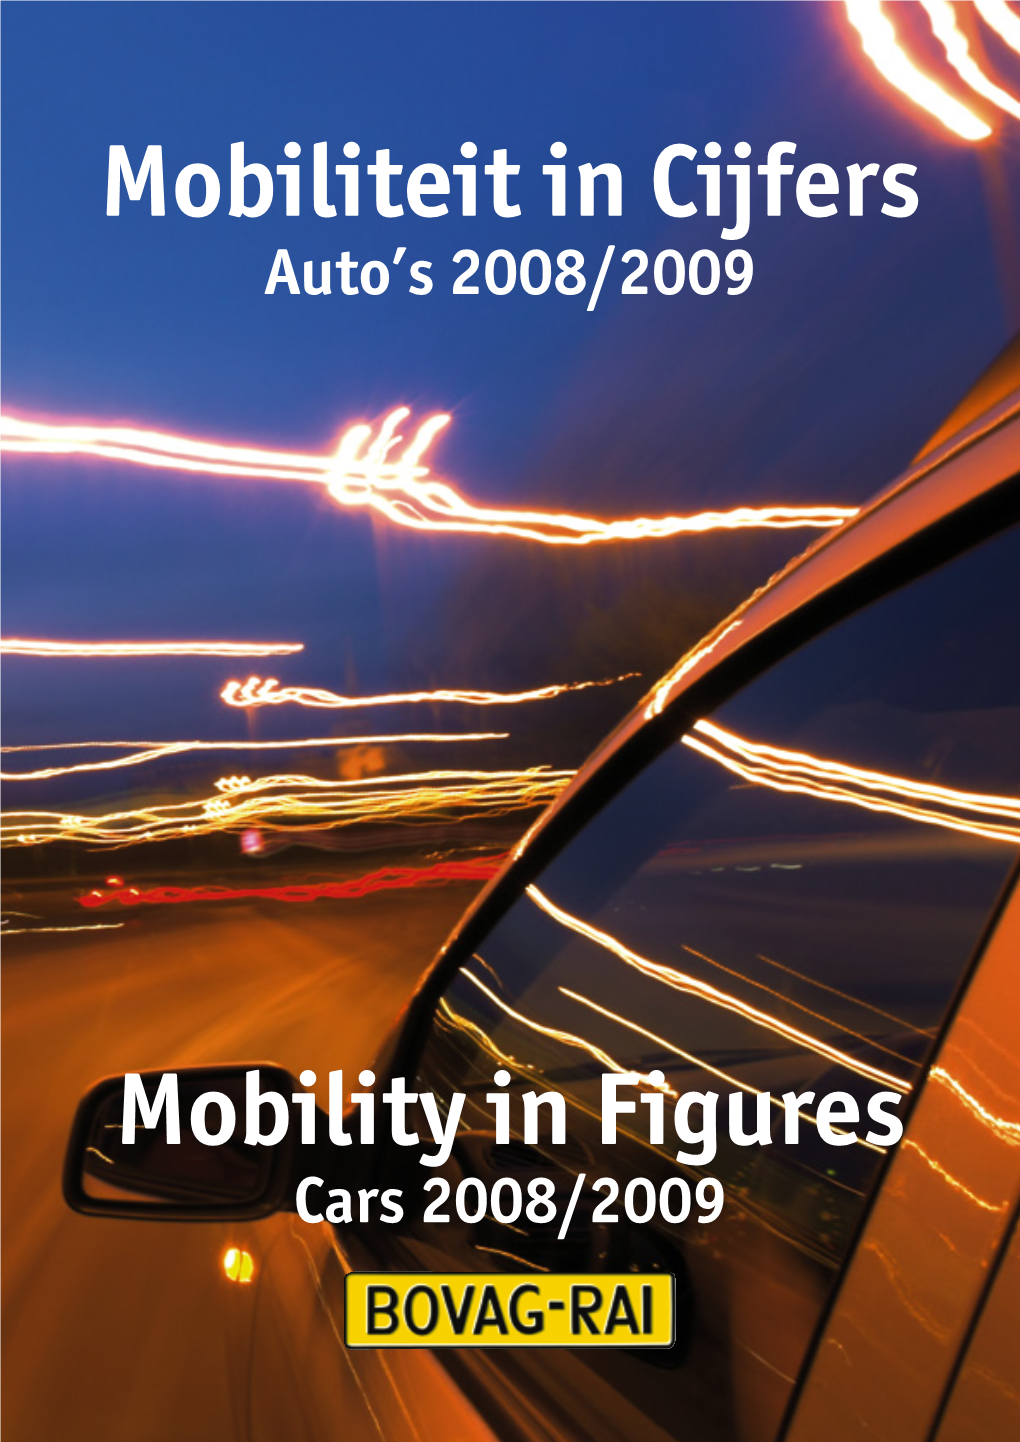 Mobiliteit in Cijfers Mobility in Figures